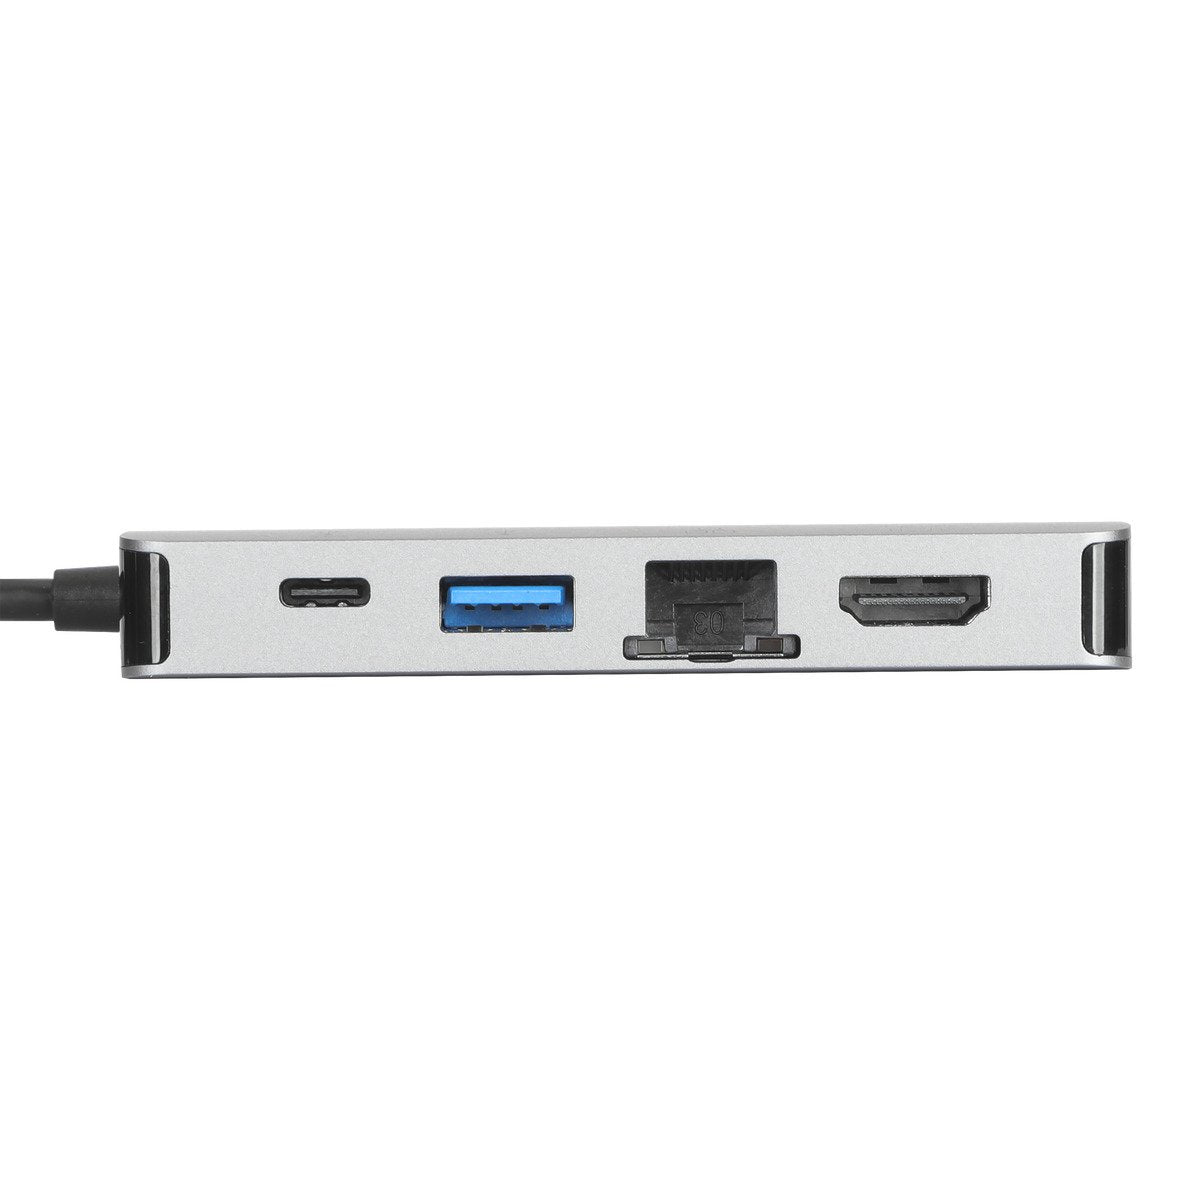 TARGUS DOCKING STATION USB-C UNIVERSALTERM DUAL HD 2 HDMI WITH 80W PD PASS-TH DOCKING STATION USB-C UNIVERSAL DUAL HD 2 HDMI WITH 80W PD PASS-THR